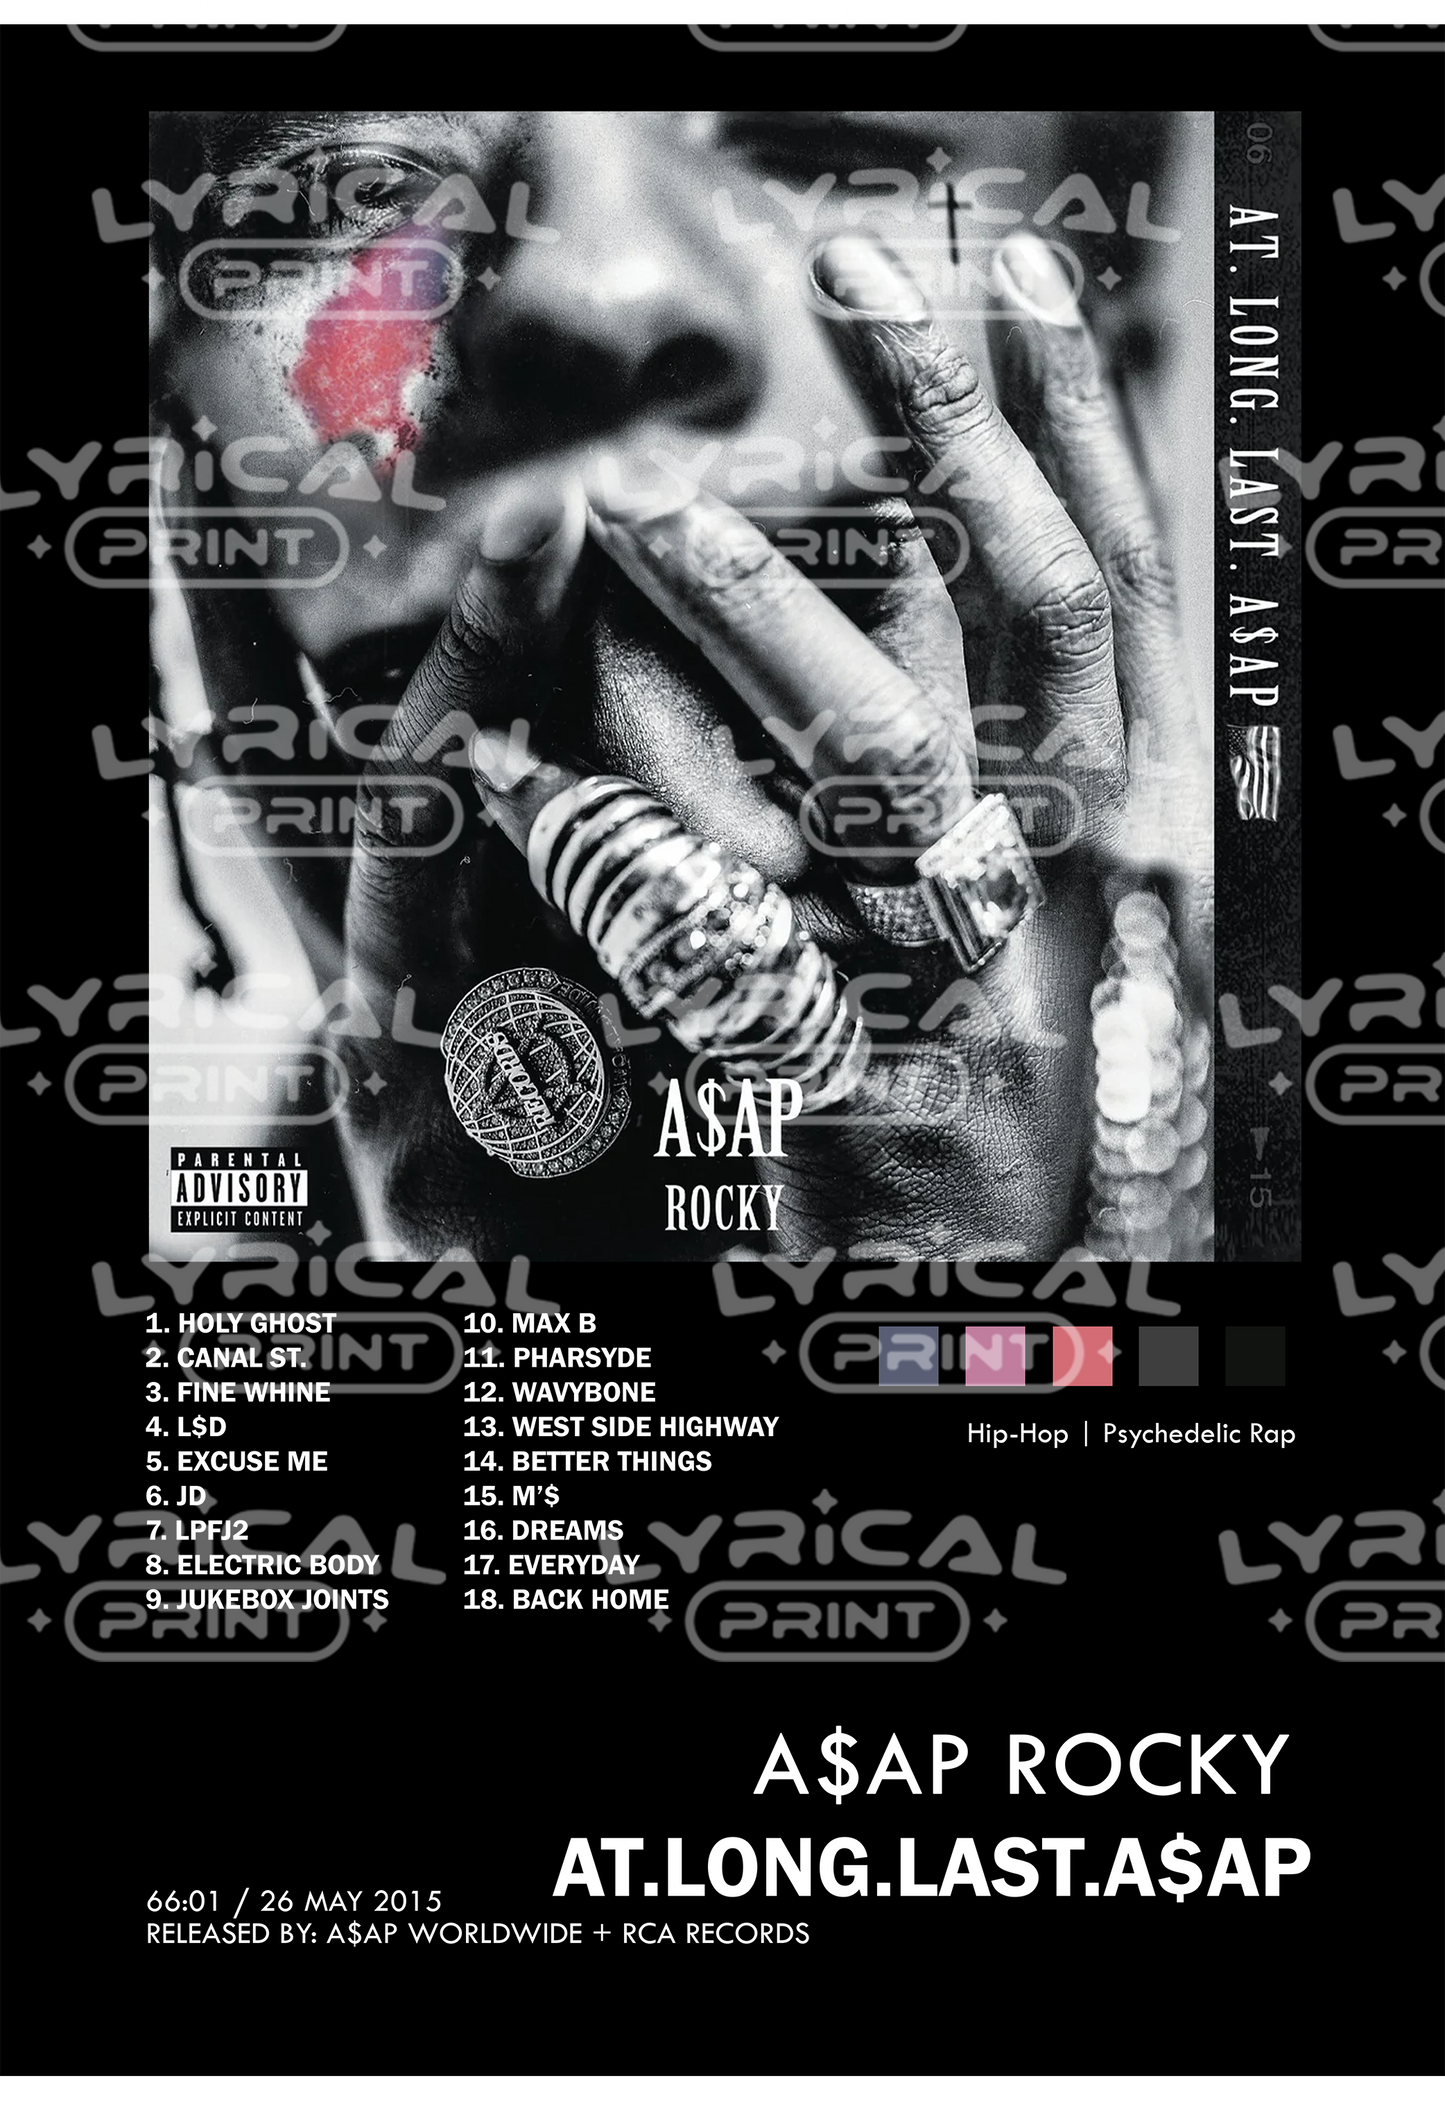 ASAP Rocky - AT.LONG.LAST.A$AP